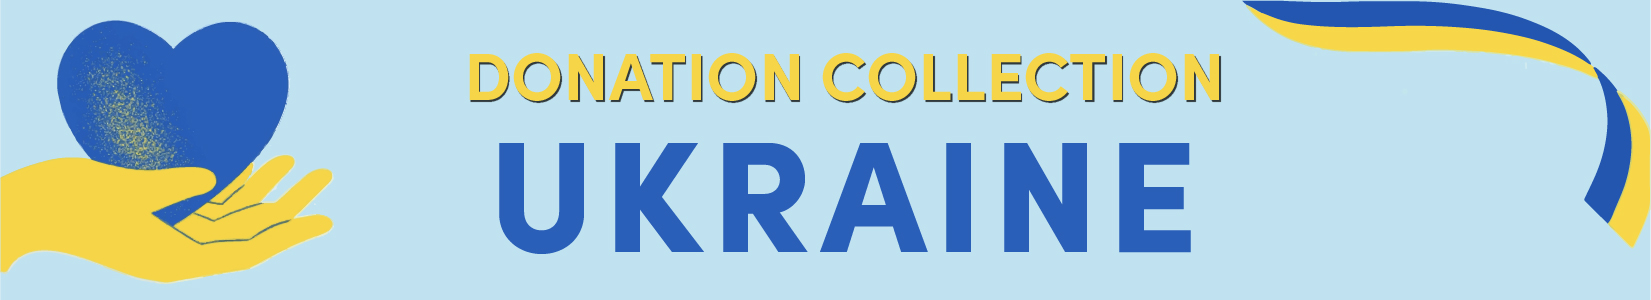 Help Ukraine donation collection